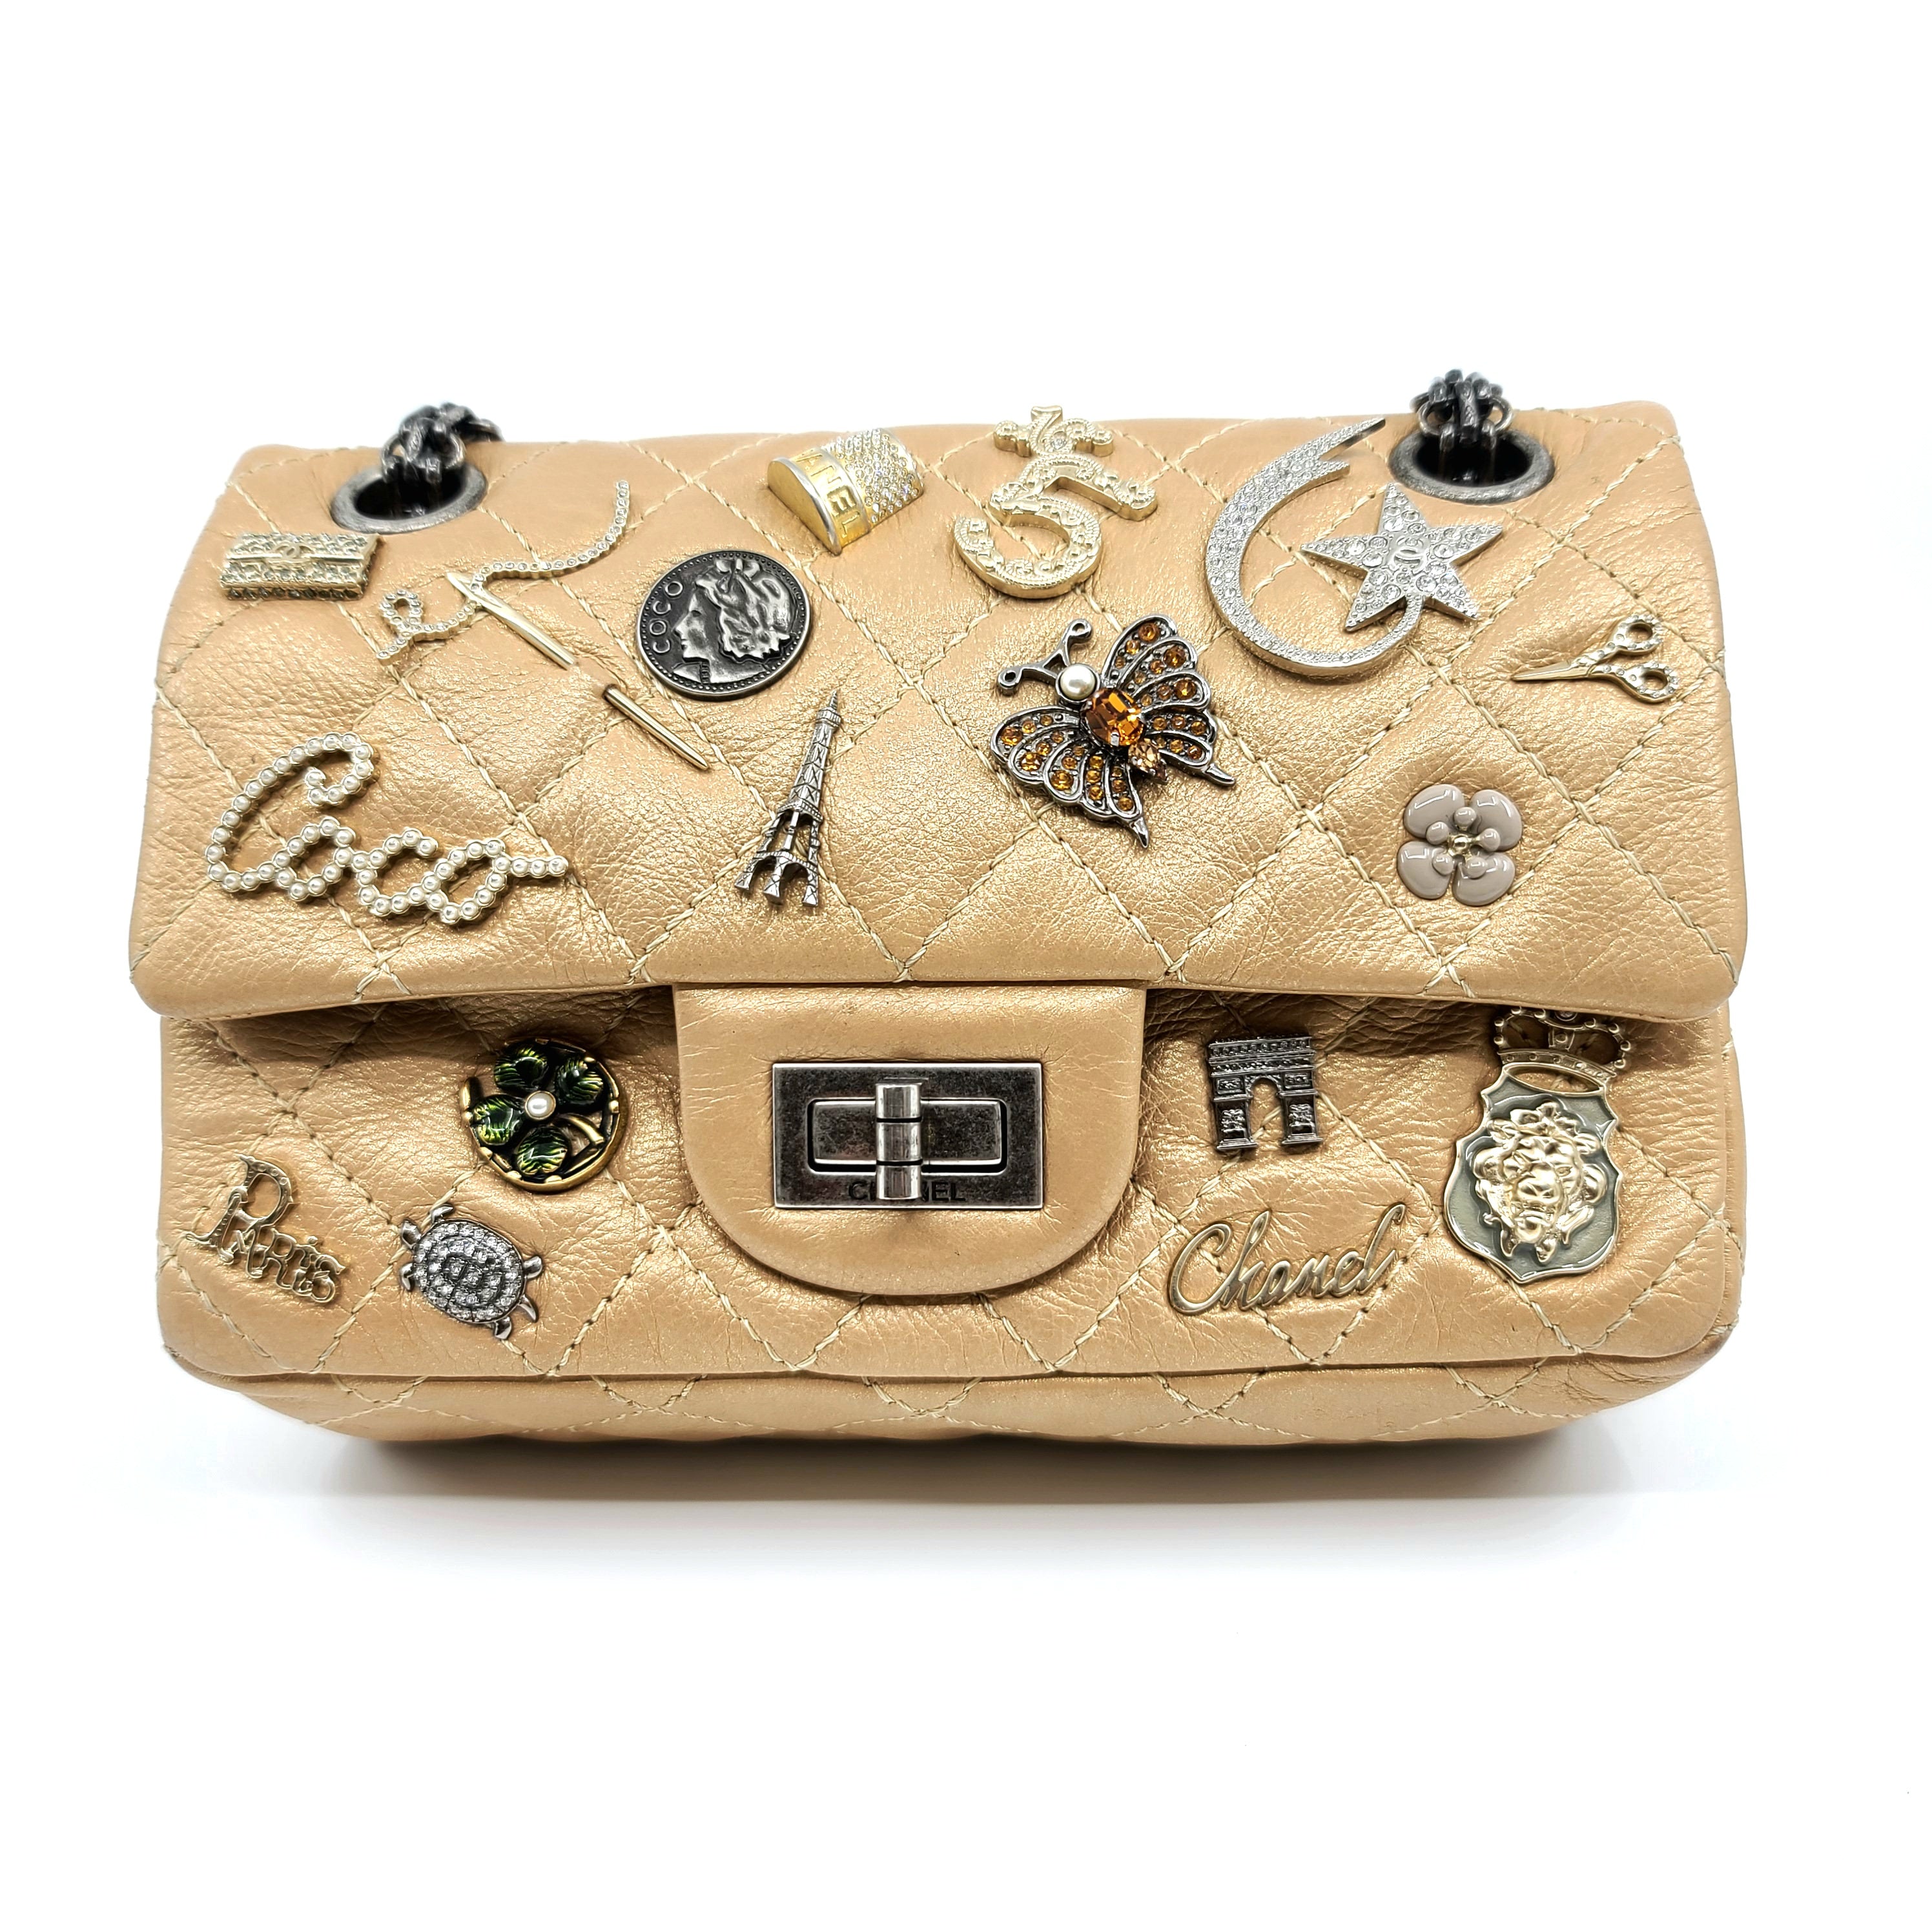 Handbags Chanel Chanel Bag 2.55 GMT